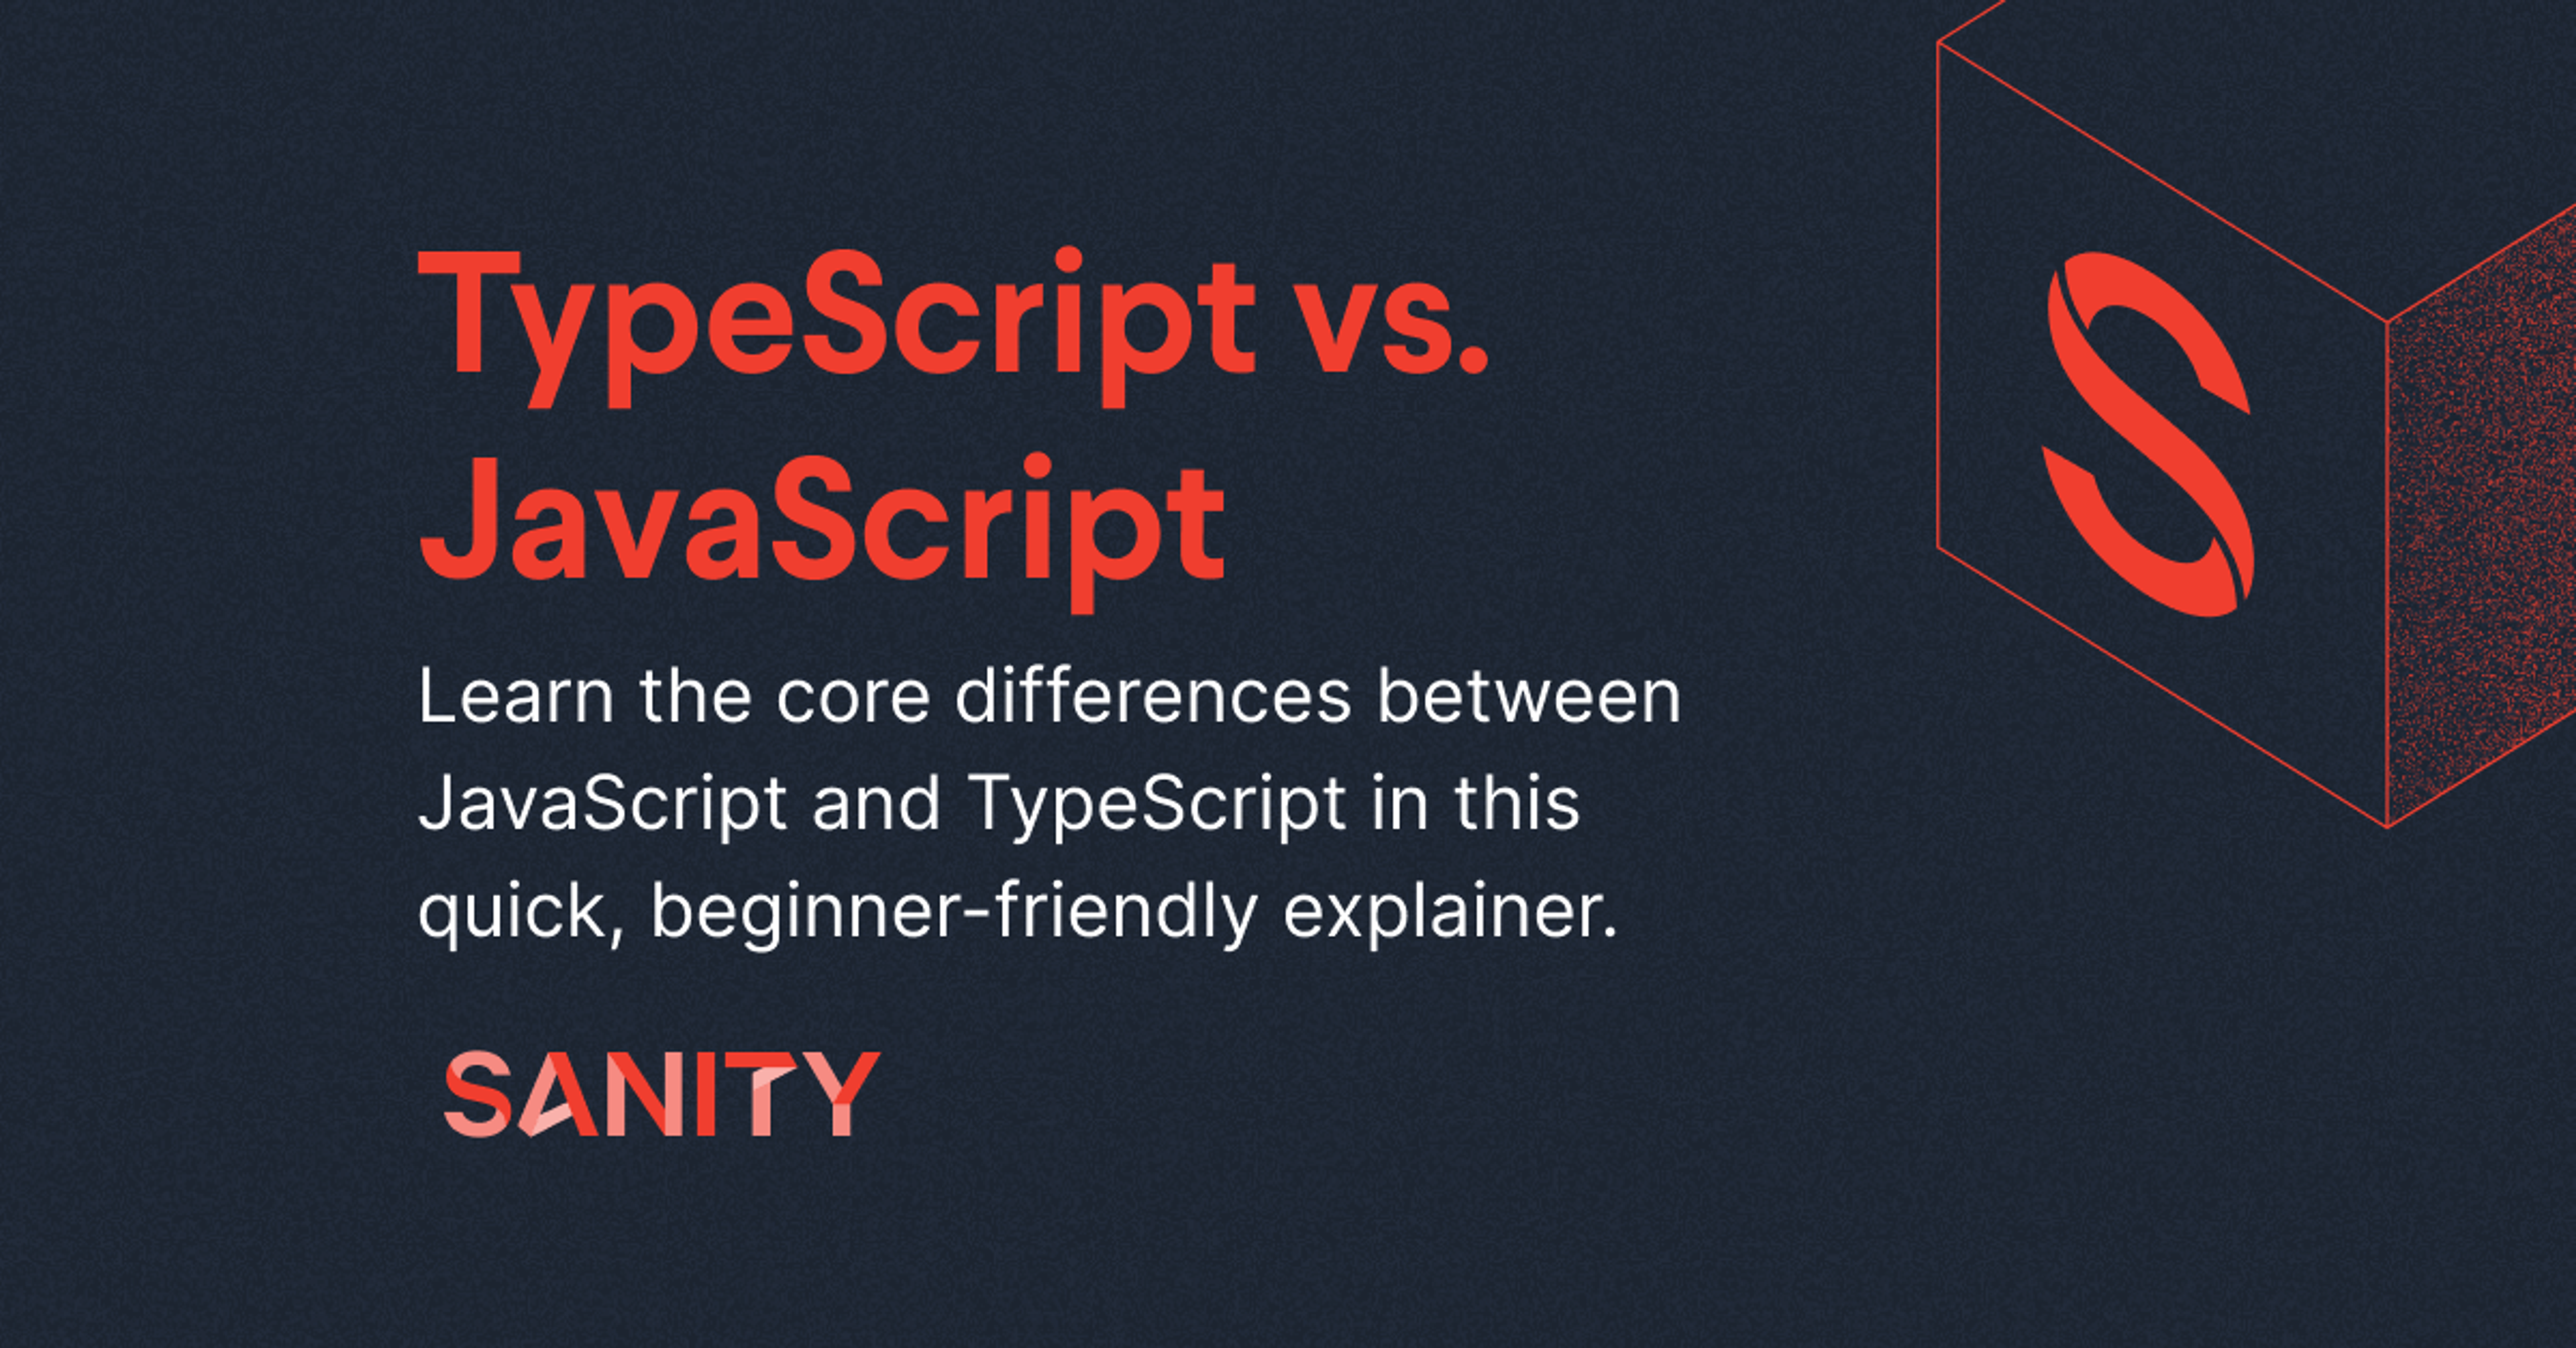 TypeScript vs. JavaScript: 7 Key Differences